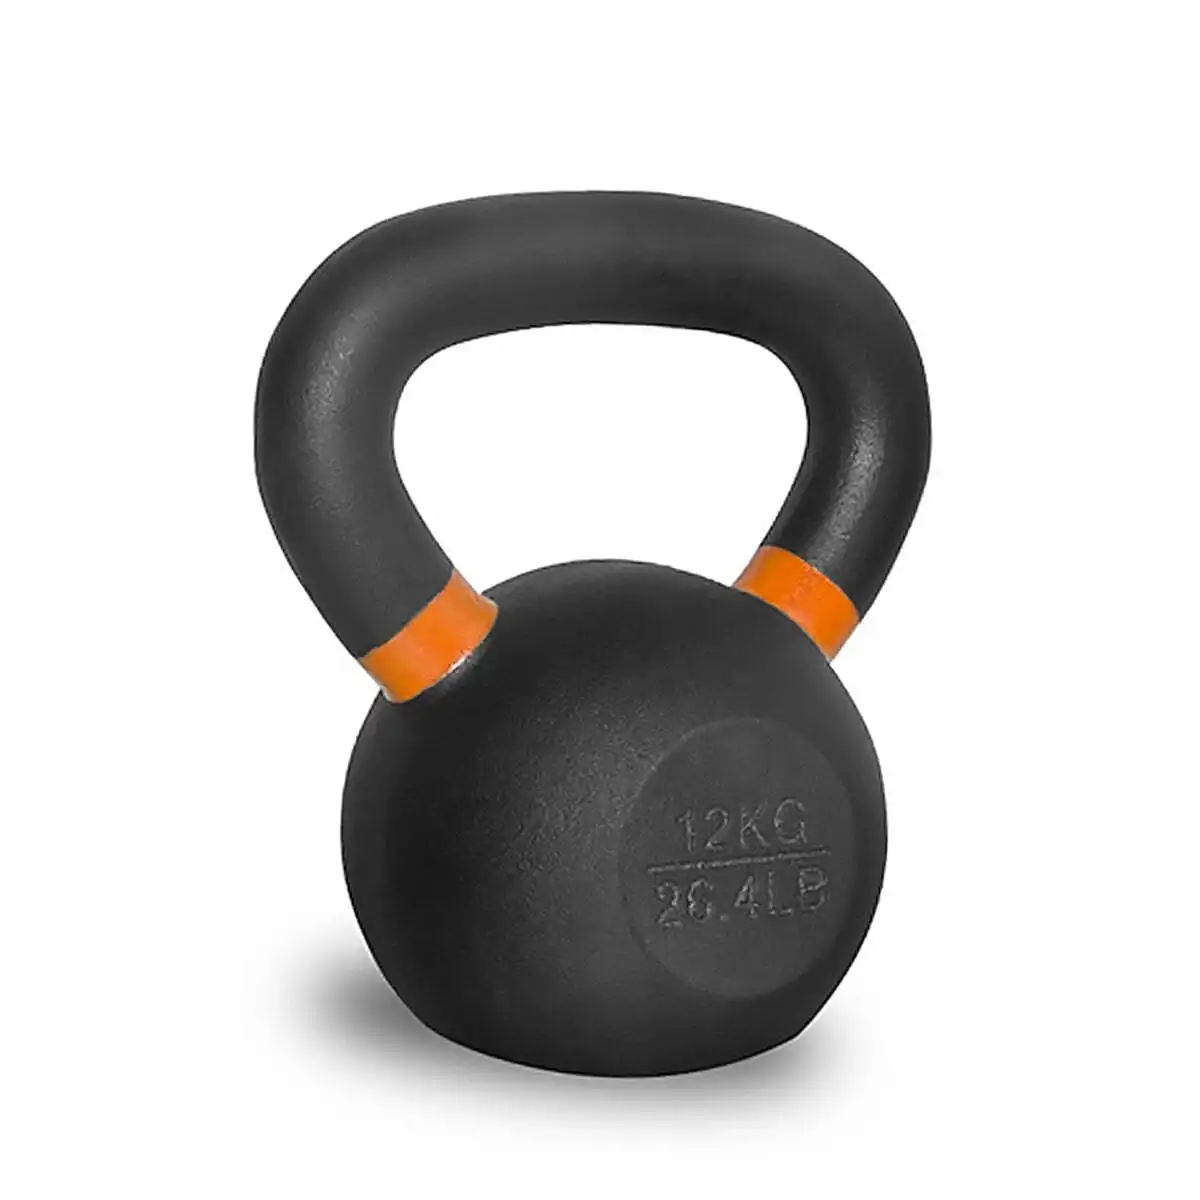 12kg Kettlebell Weight (Orange) for Gym & Exercise, Wide & Secure Base